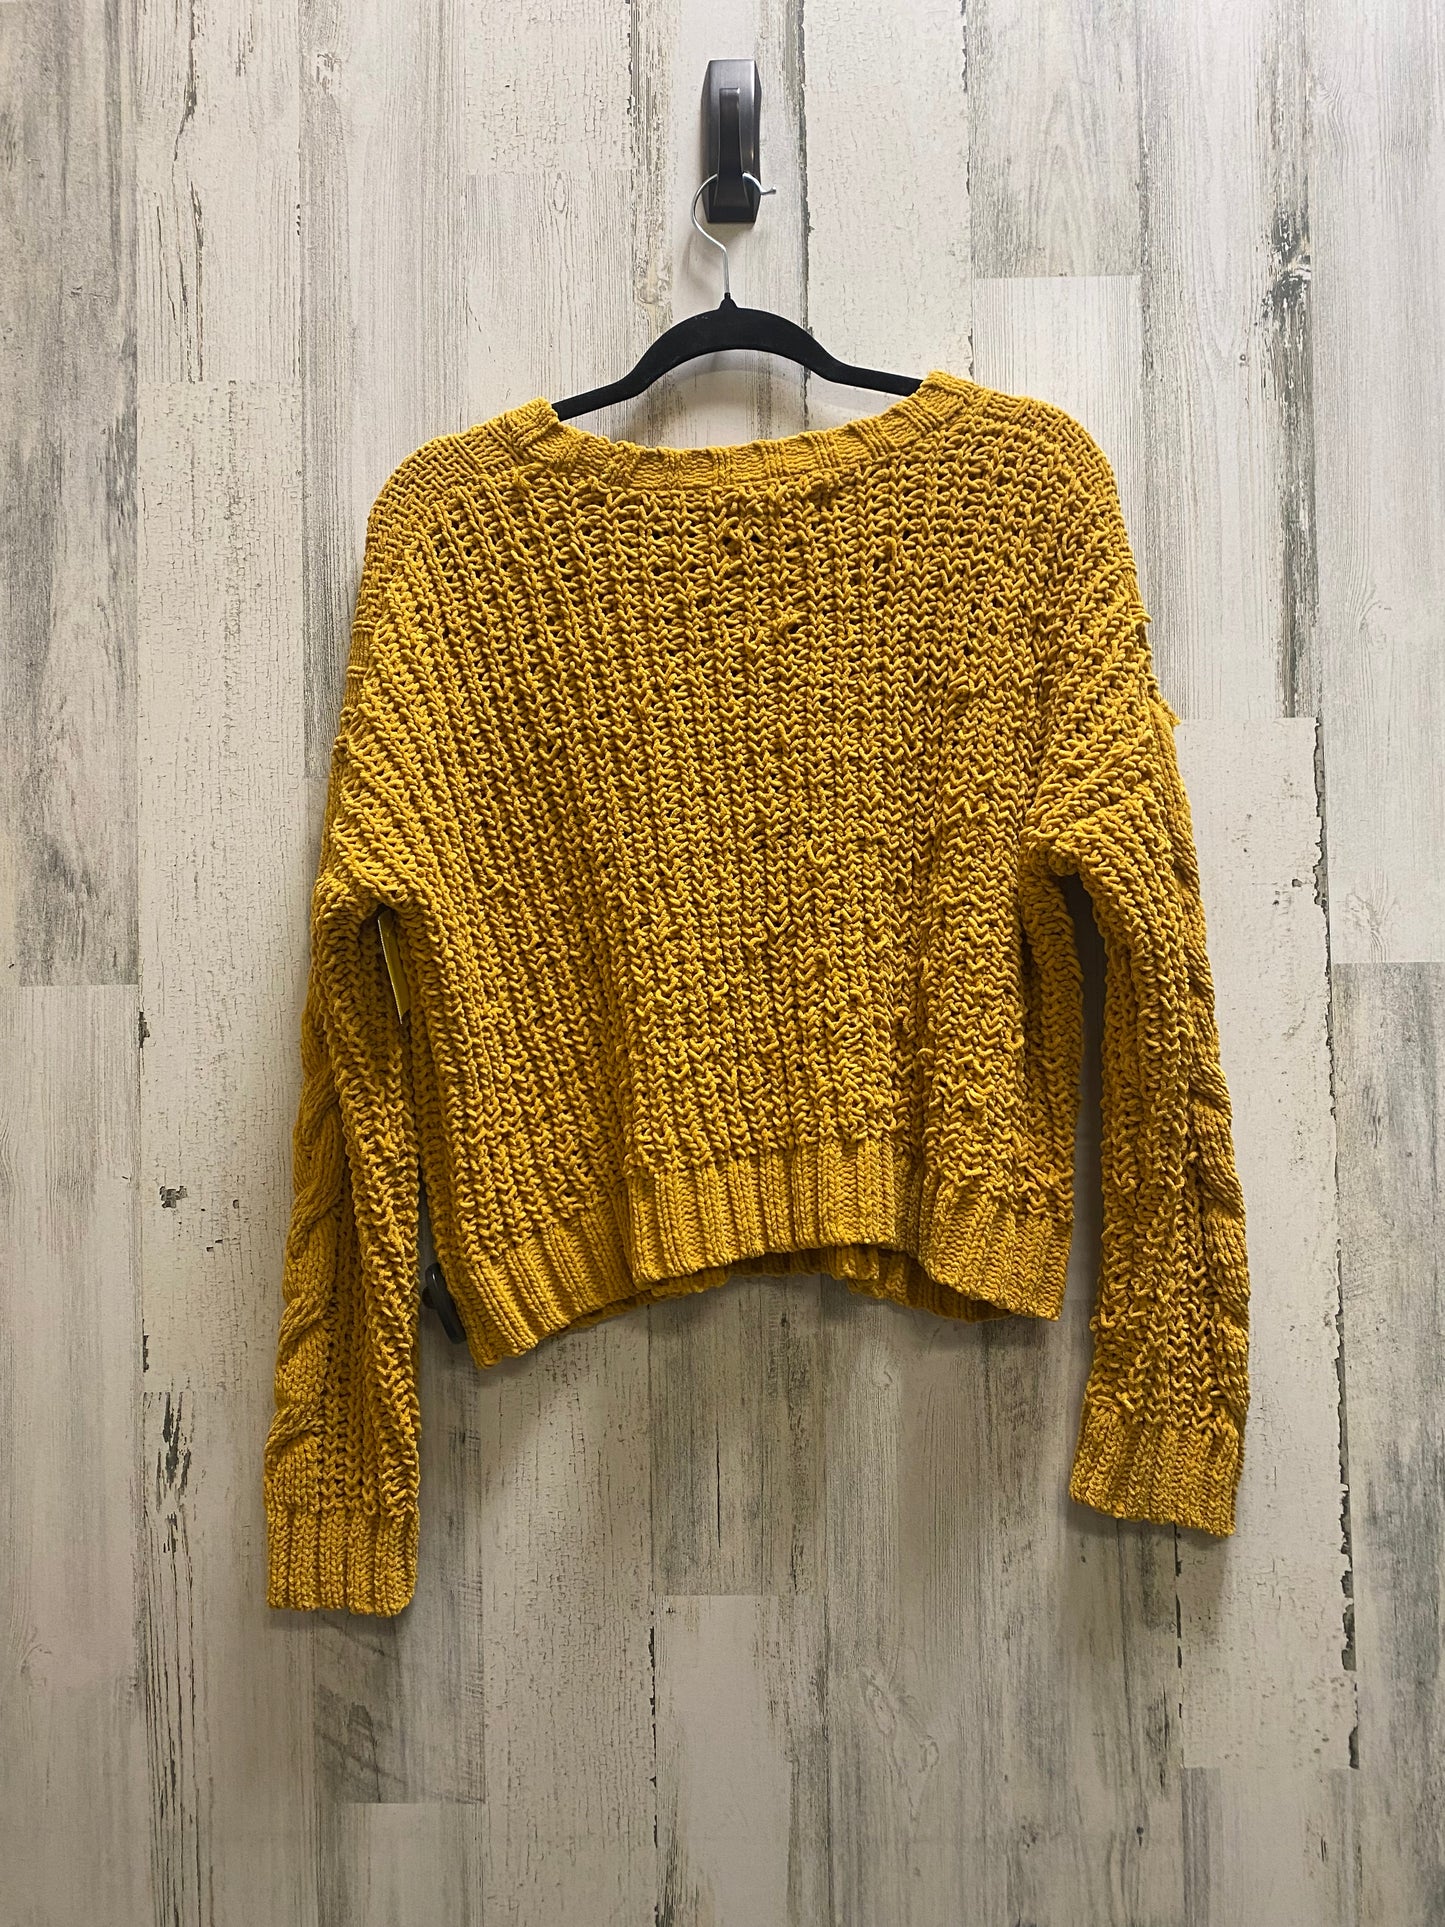 Sweater By Aeropostale  Size: M